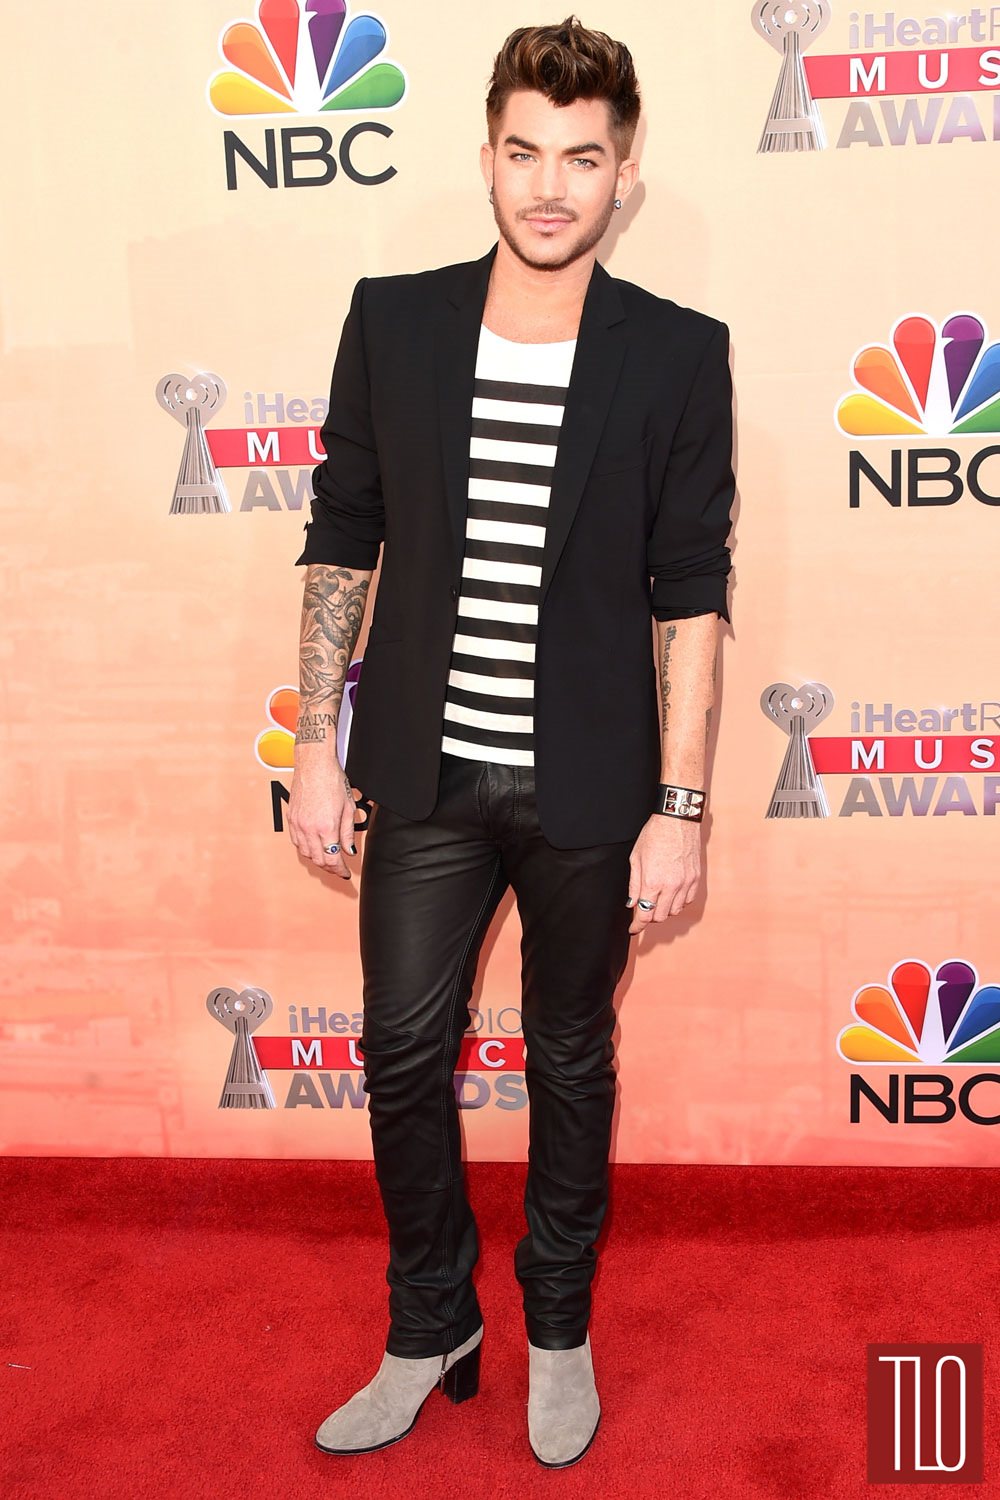 Adam-Lambert-2015-iHeartRadio-Music-Awards-Red-Carpet-Fashion-Tom-Lorenzo-Site-TLO (1)